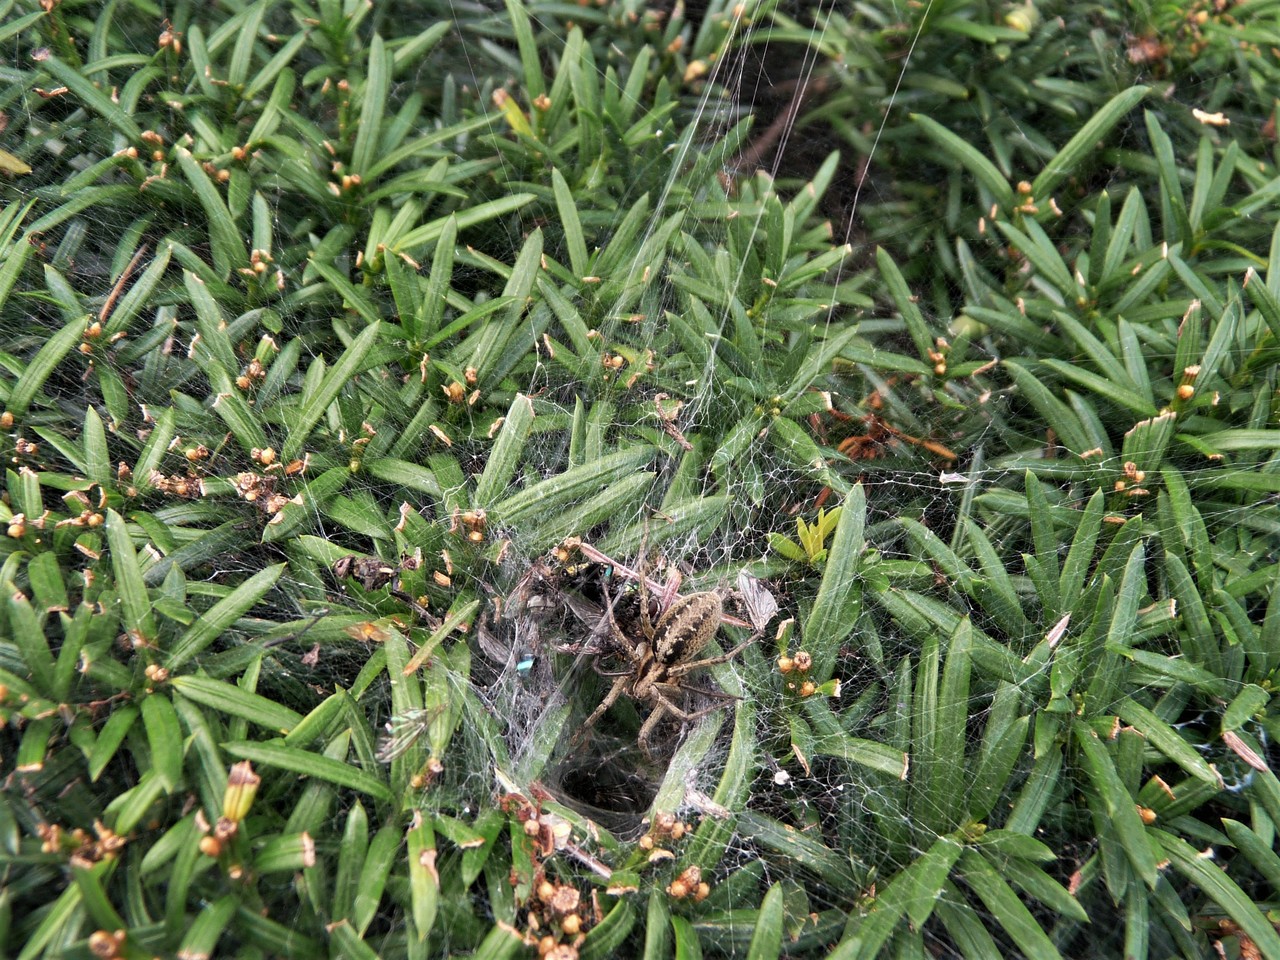 Labyrinth spider Agelena labyrinthica